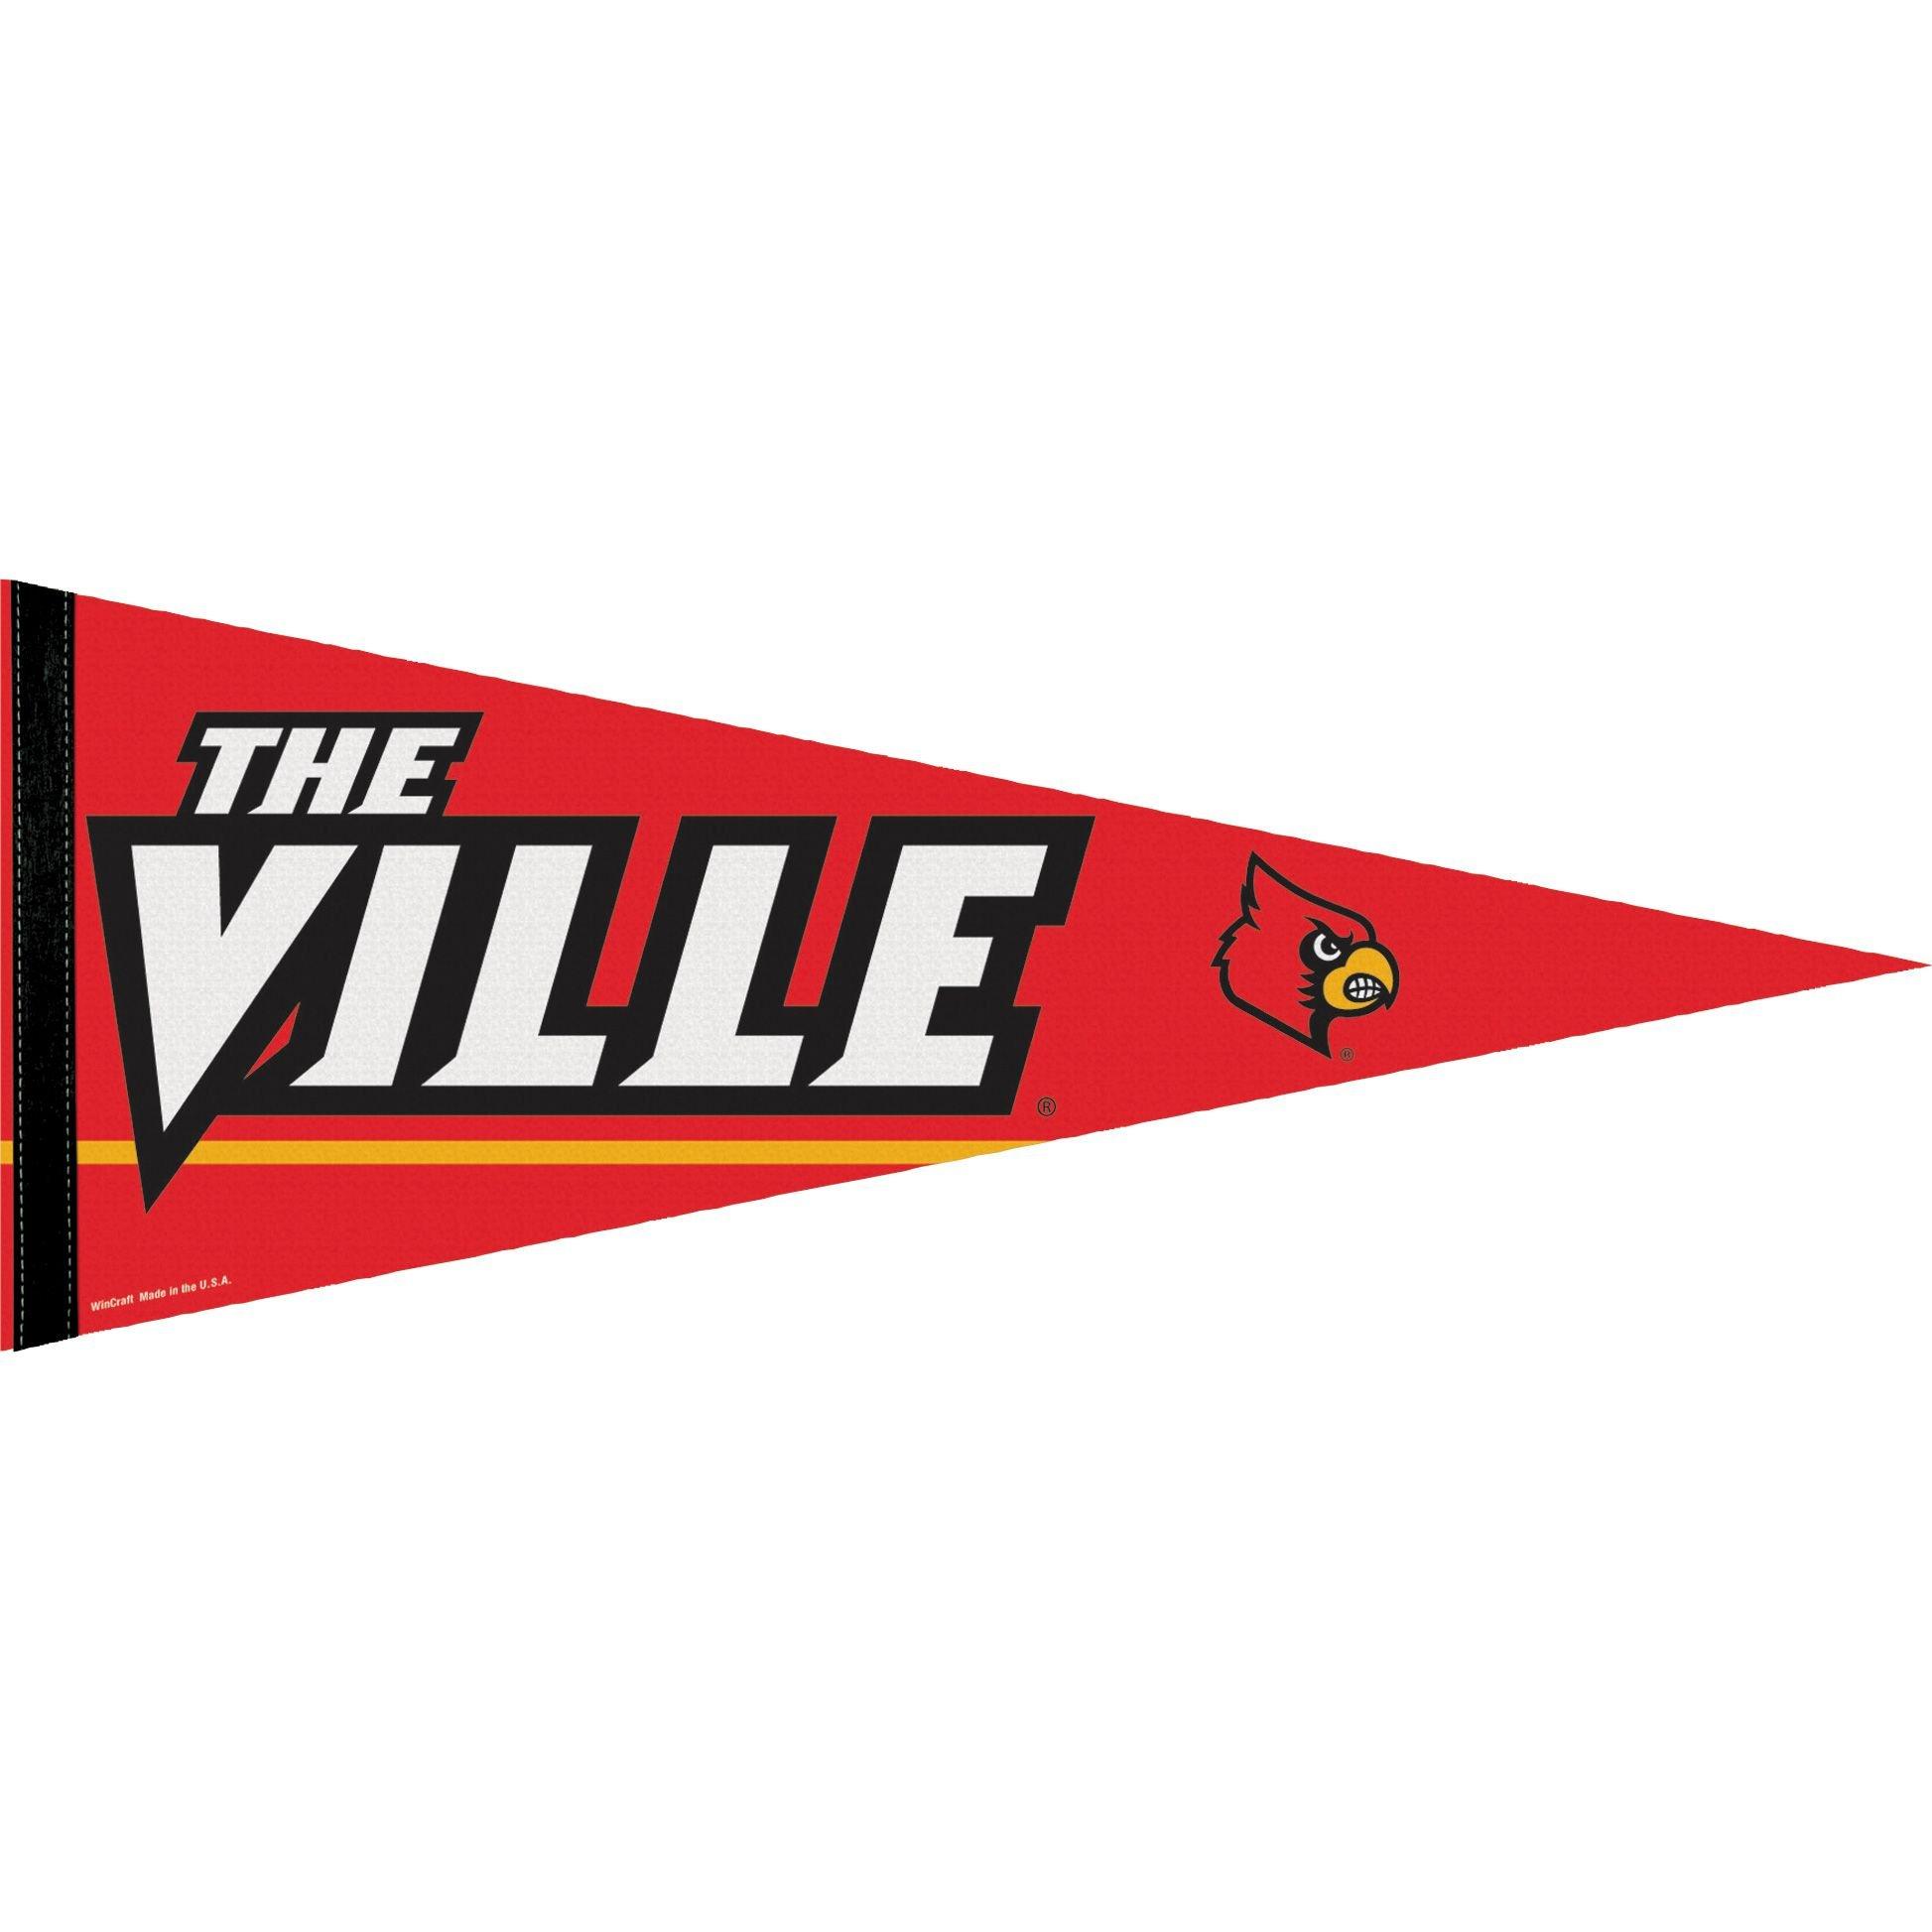 Louisville Cardinals Throwback Vintage Retro Large Flag